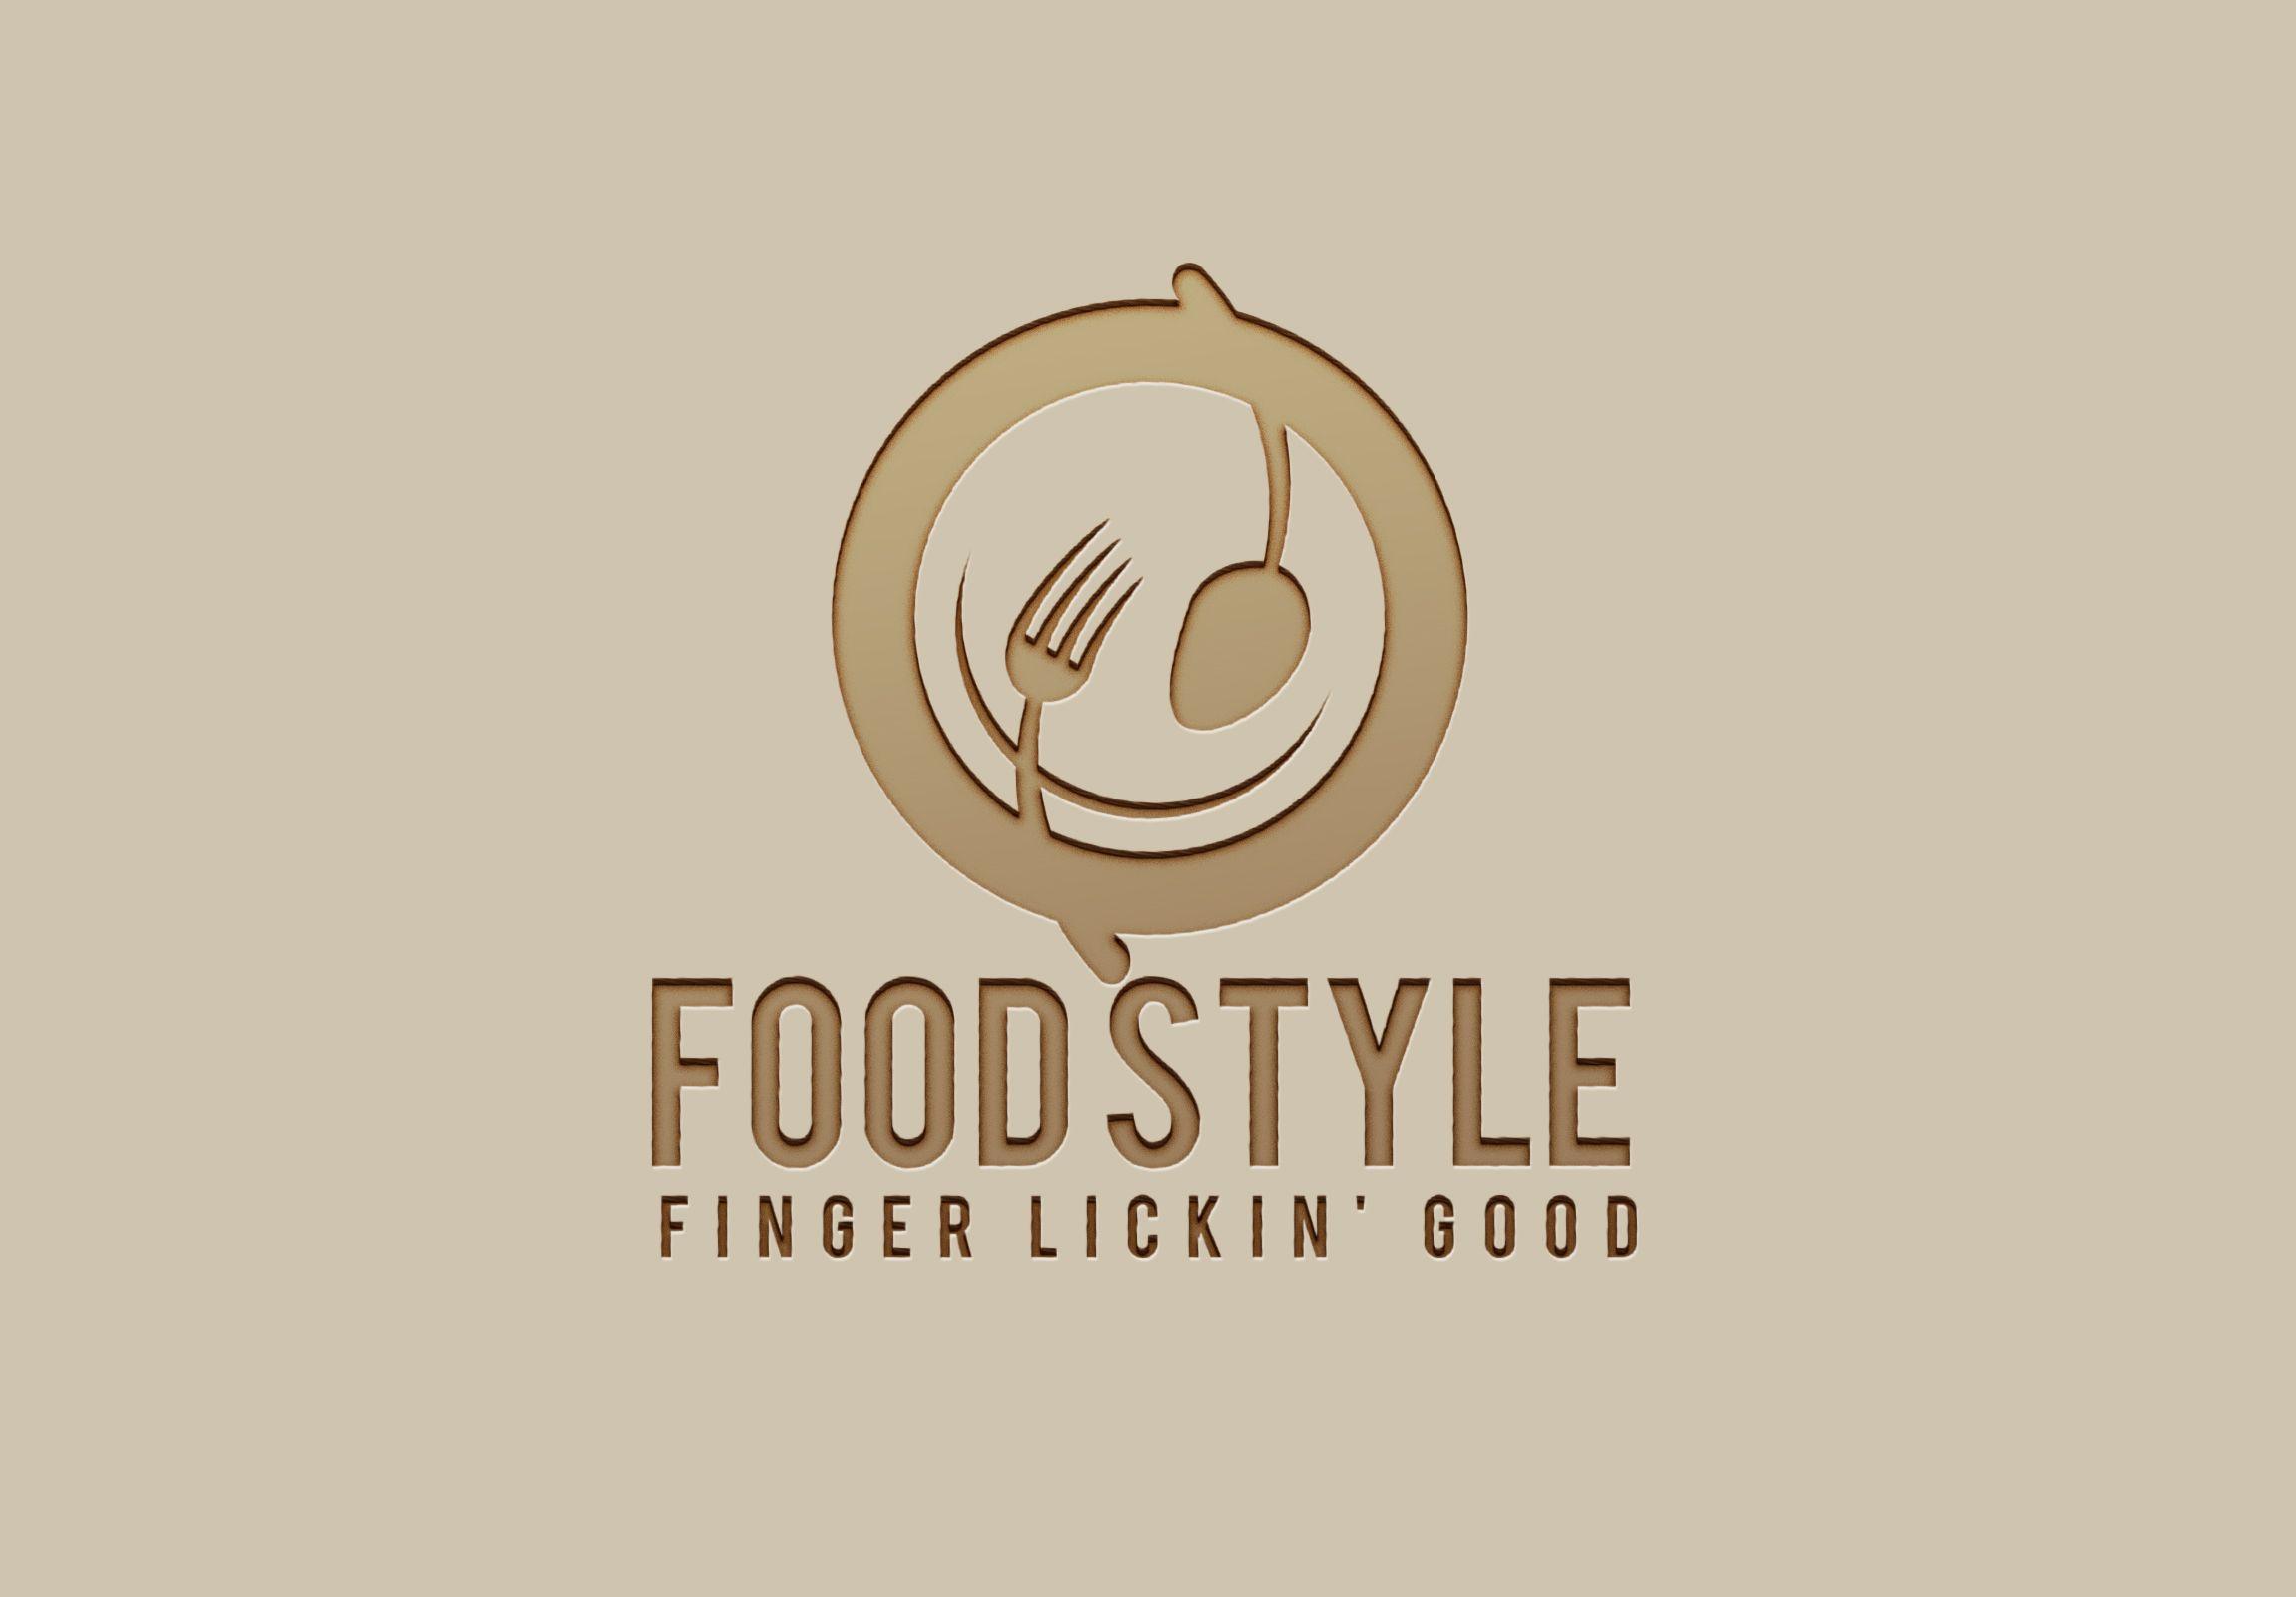 Restaurant Business Logo - Design Seafood, Fast Food, Restaurant, Food Blog business Logo